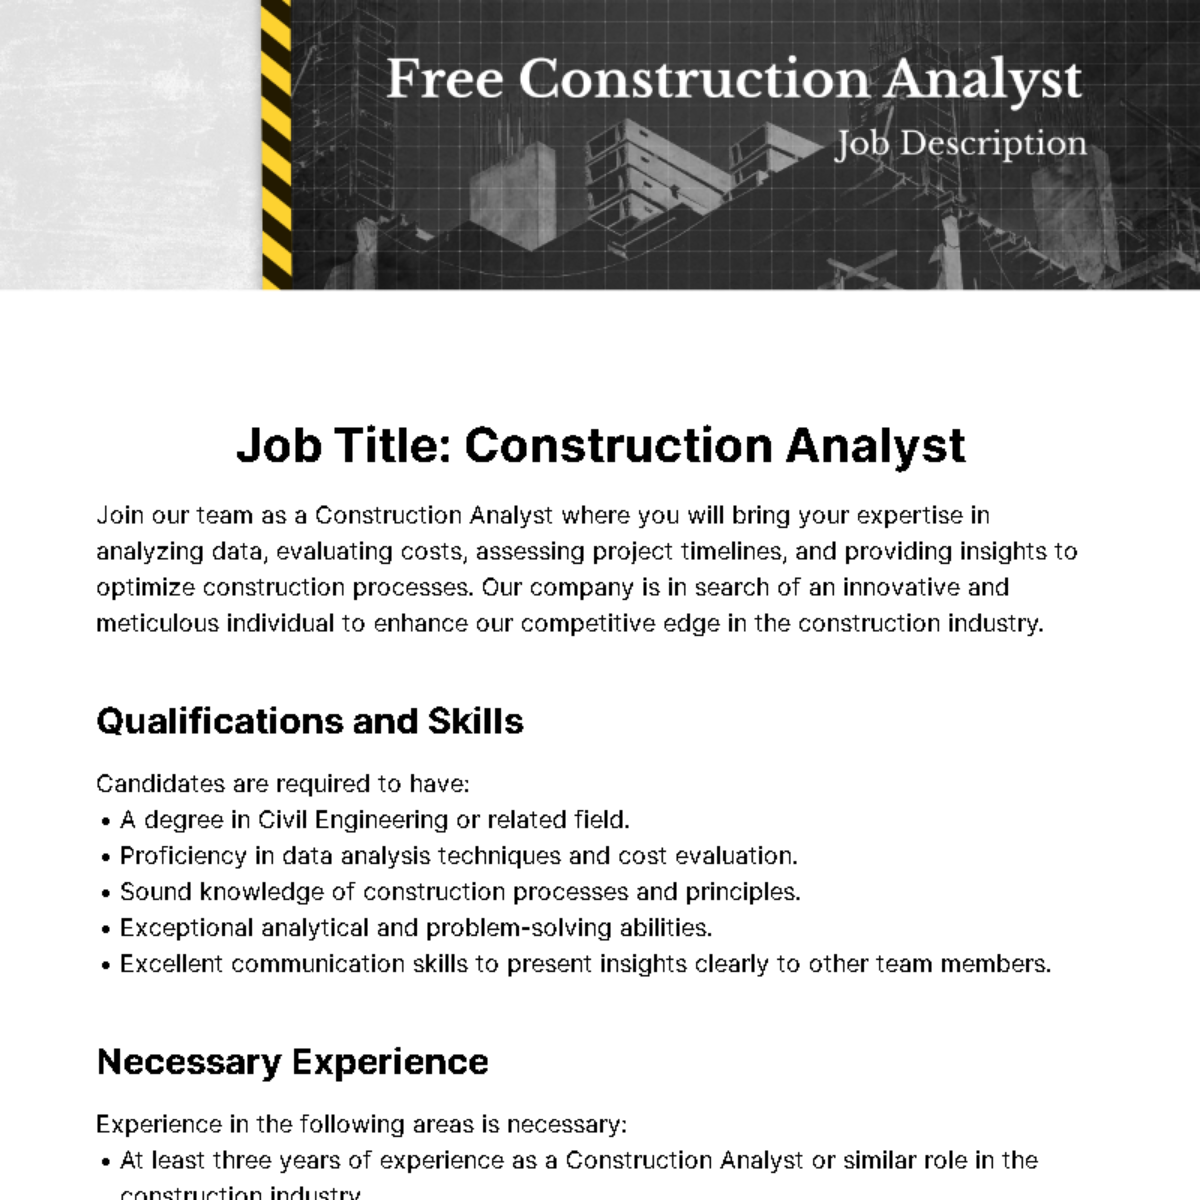 Free Construction Analyst Job Description Template